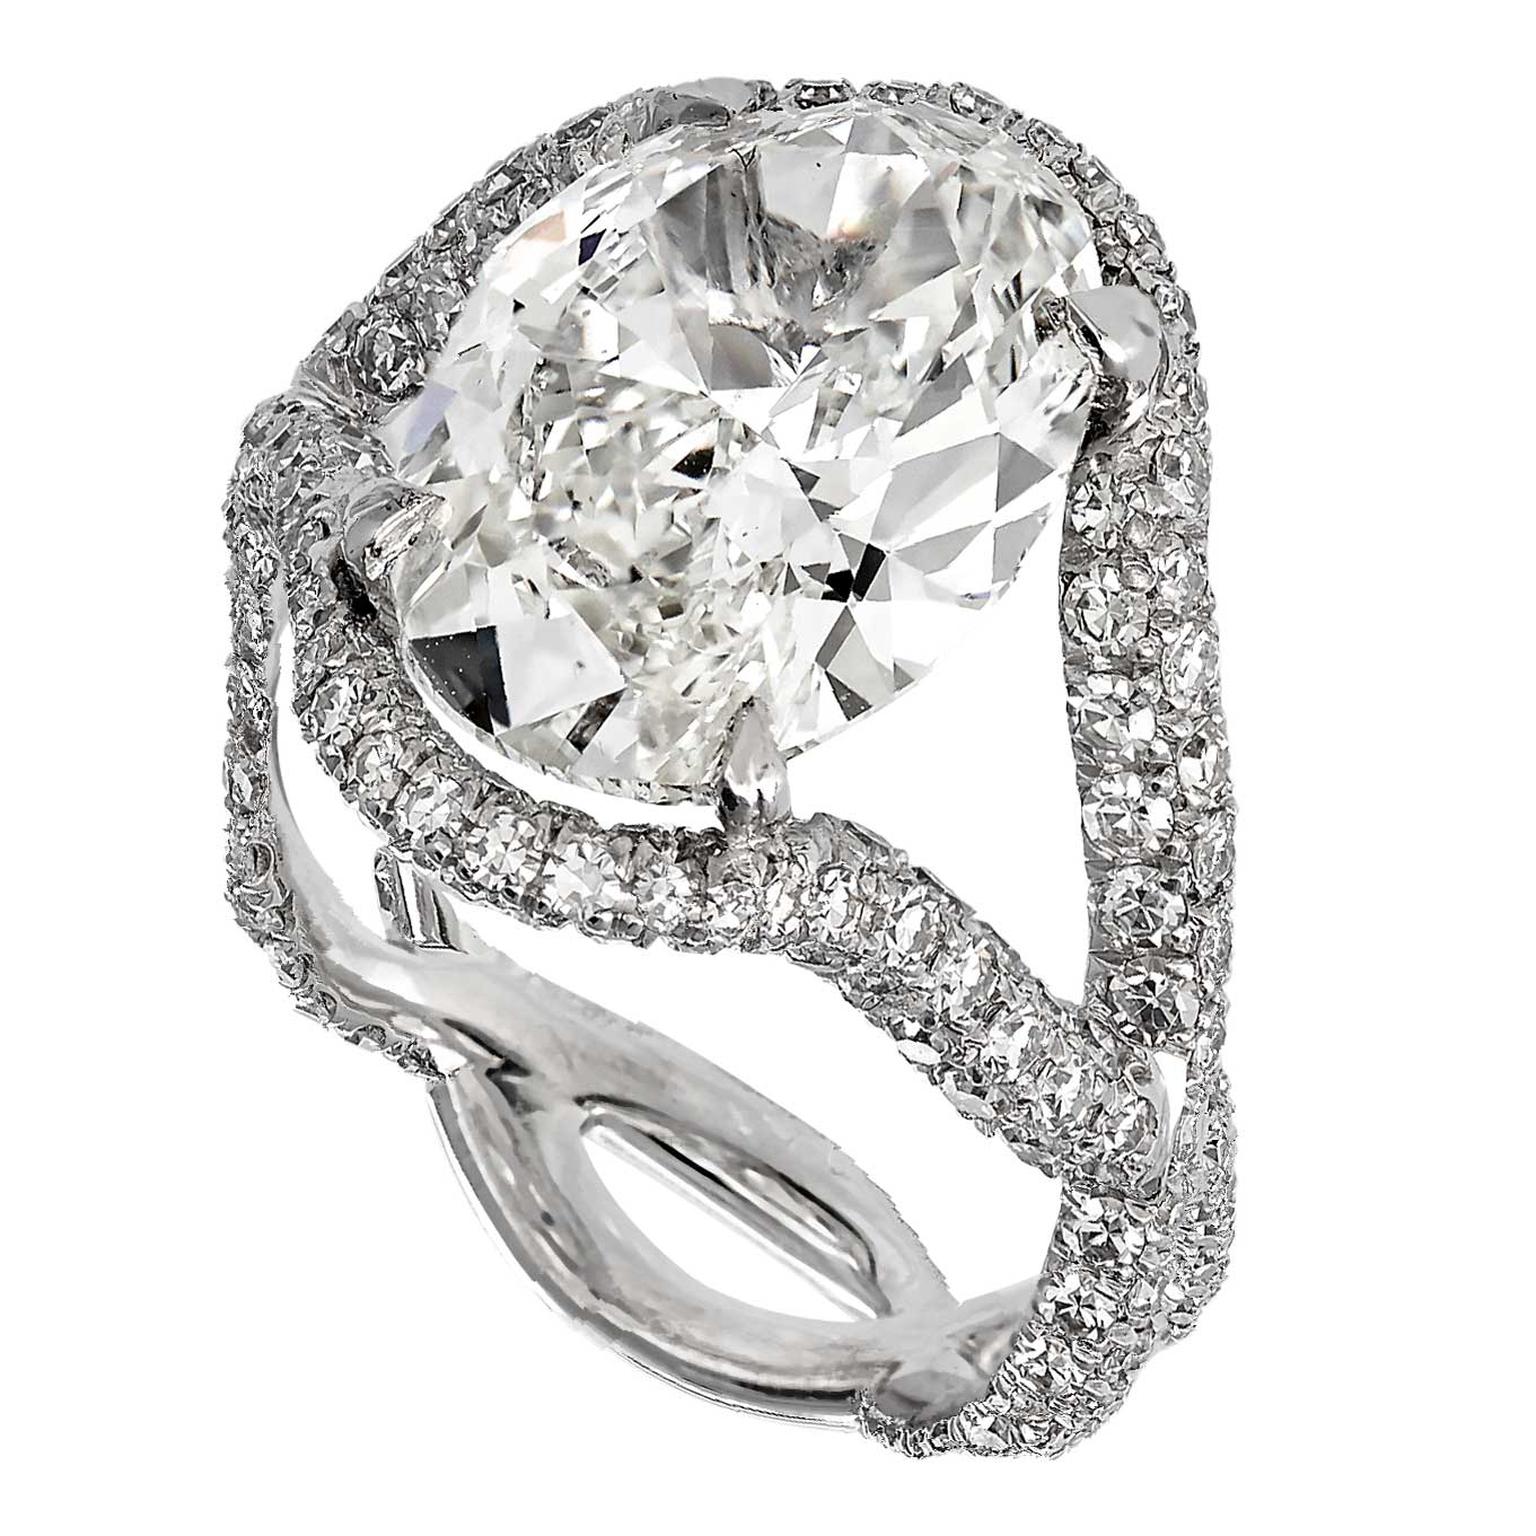 David Morris oval diamond twisted shank engagement ring